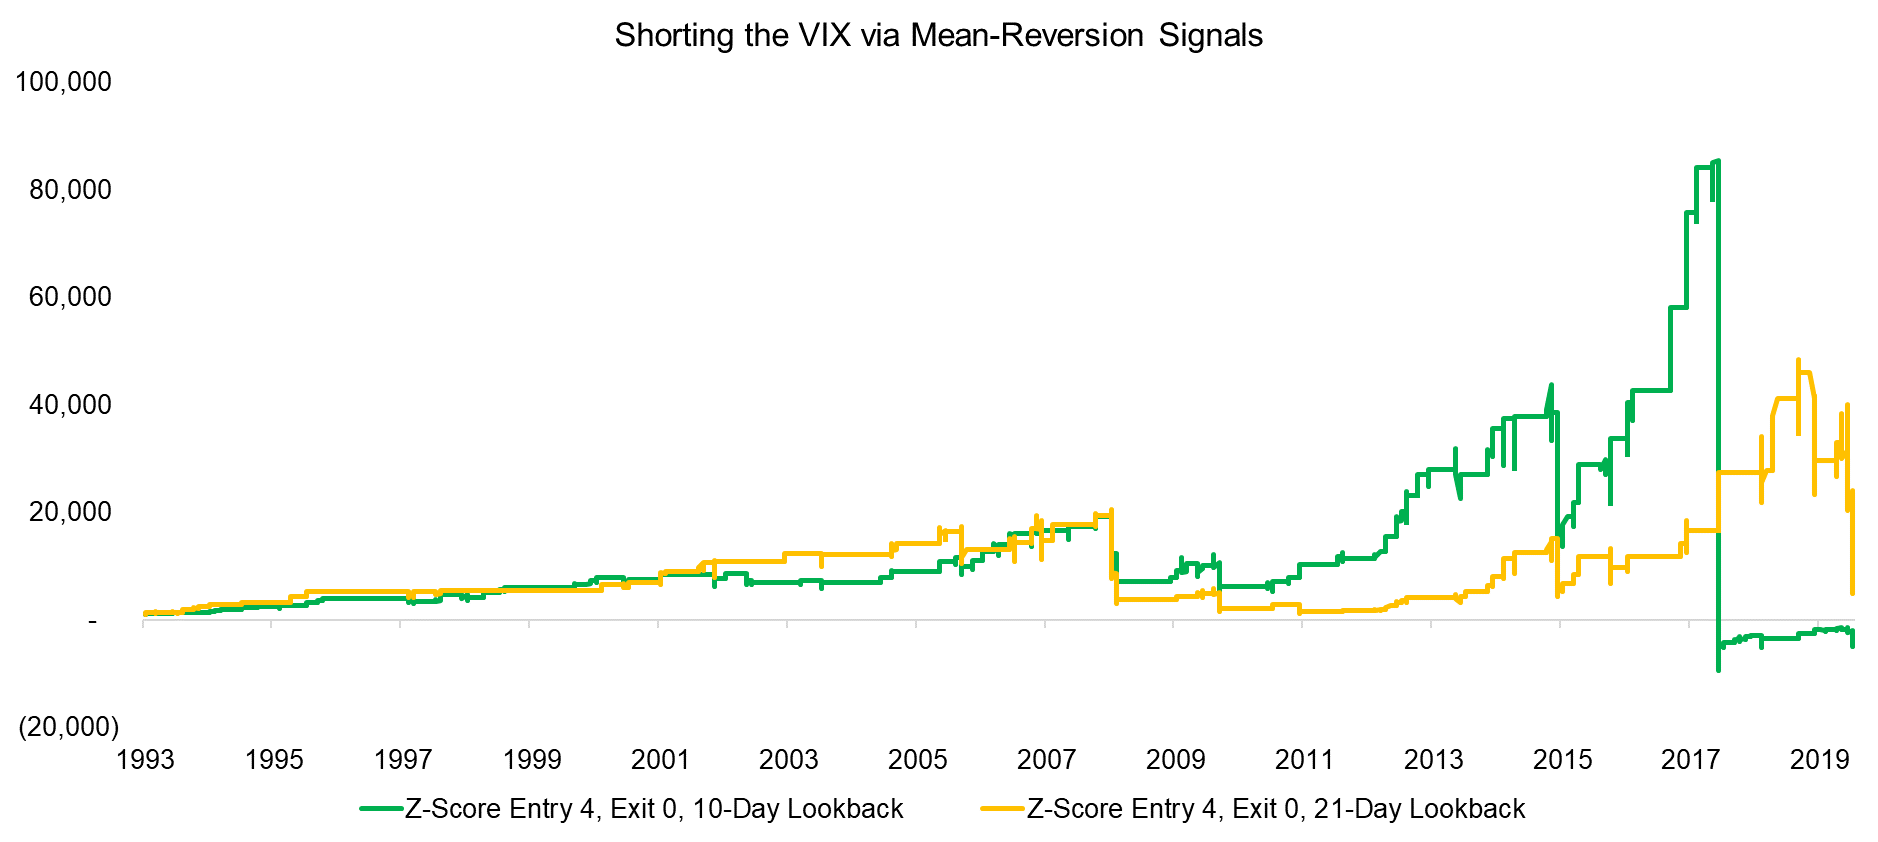 Shorting the VIX via Mean-Reversion Signals